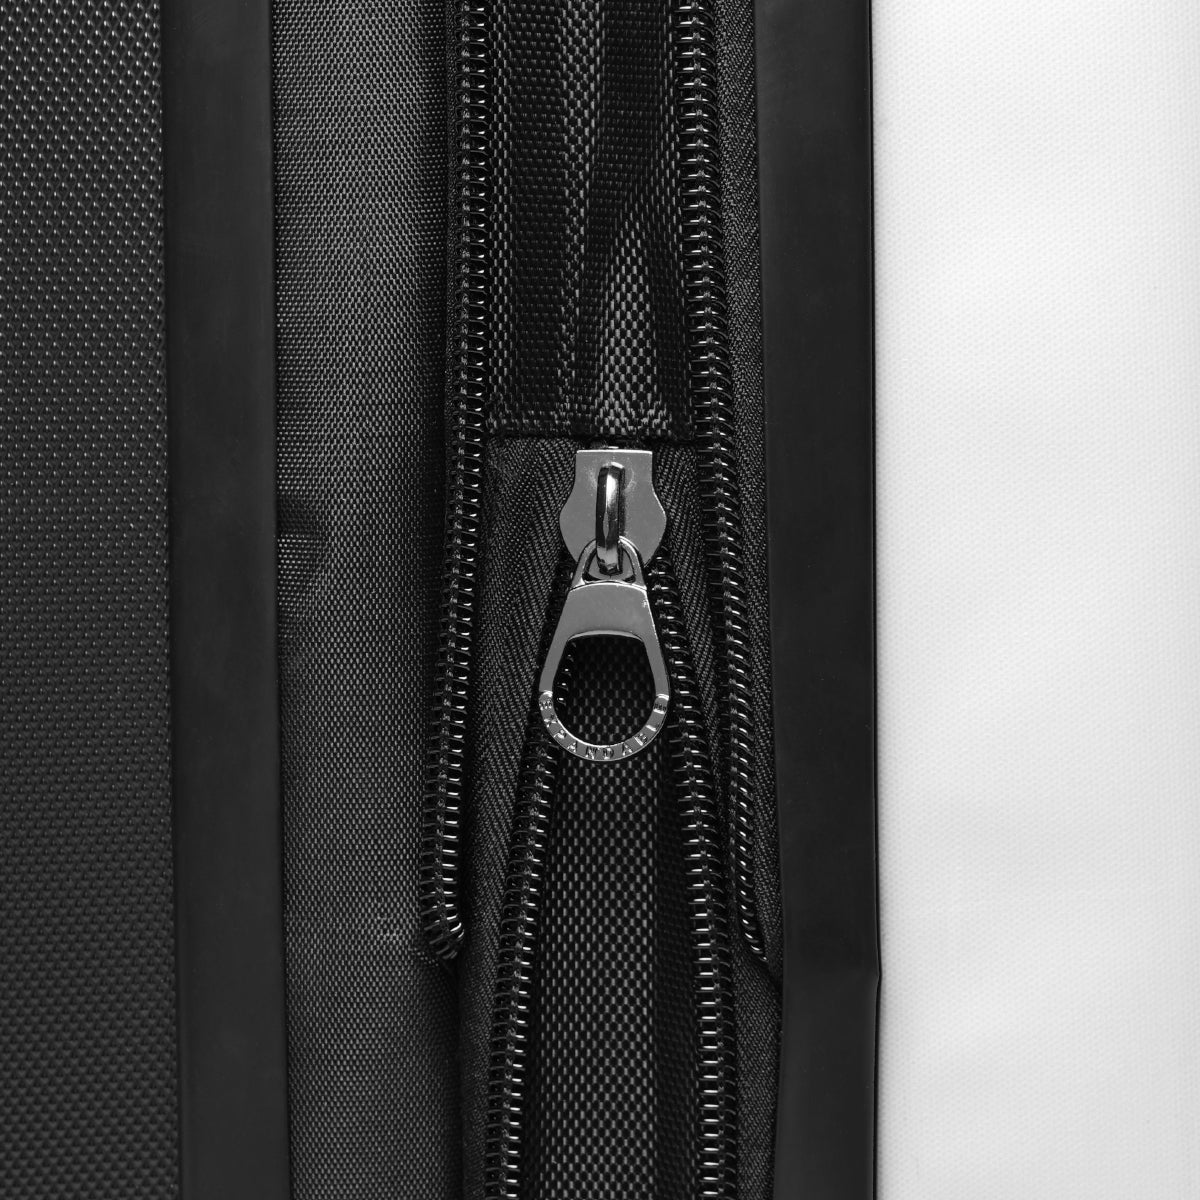 Getrott Janet Jackson Rhytm Nation 1814 Black Cabin Suitcase Inner Pockets Extended Storage Adjustable Telescopic Handle Inner Pockets Double wheeled Polycarbonate Hard-shell Built-in Lock